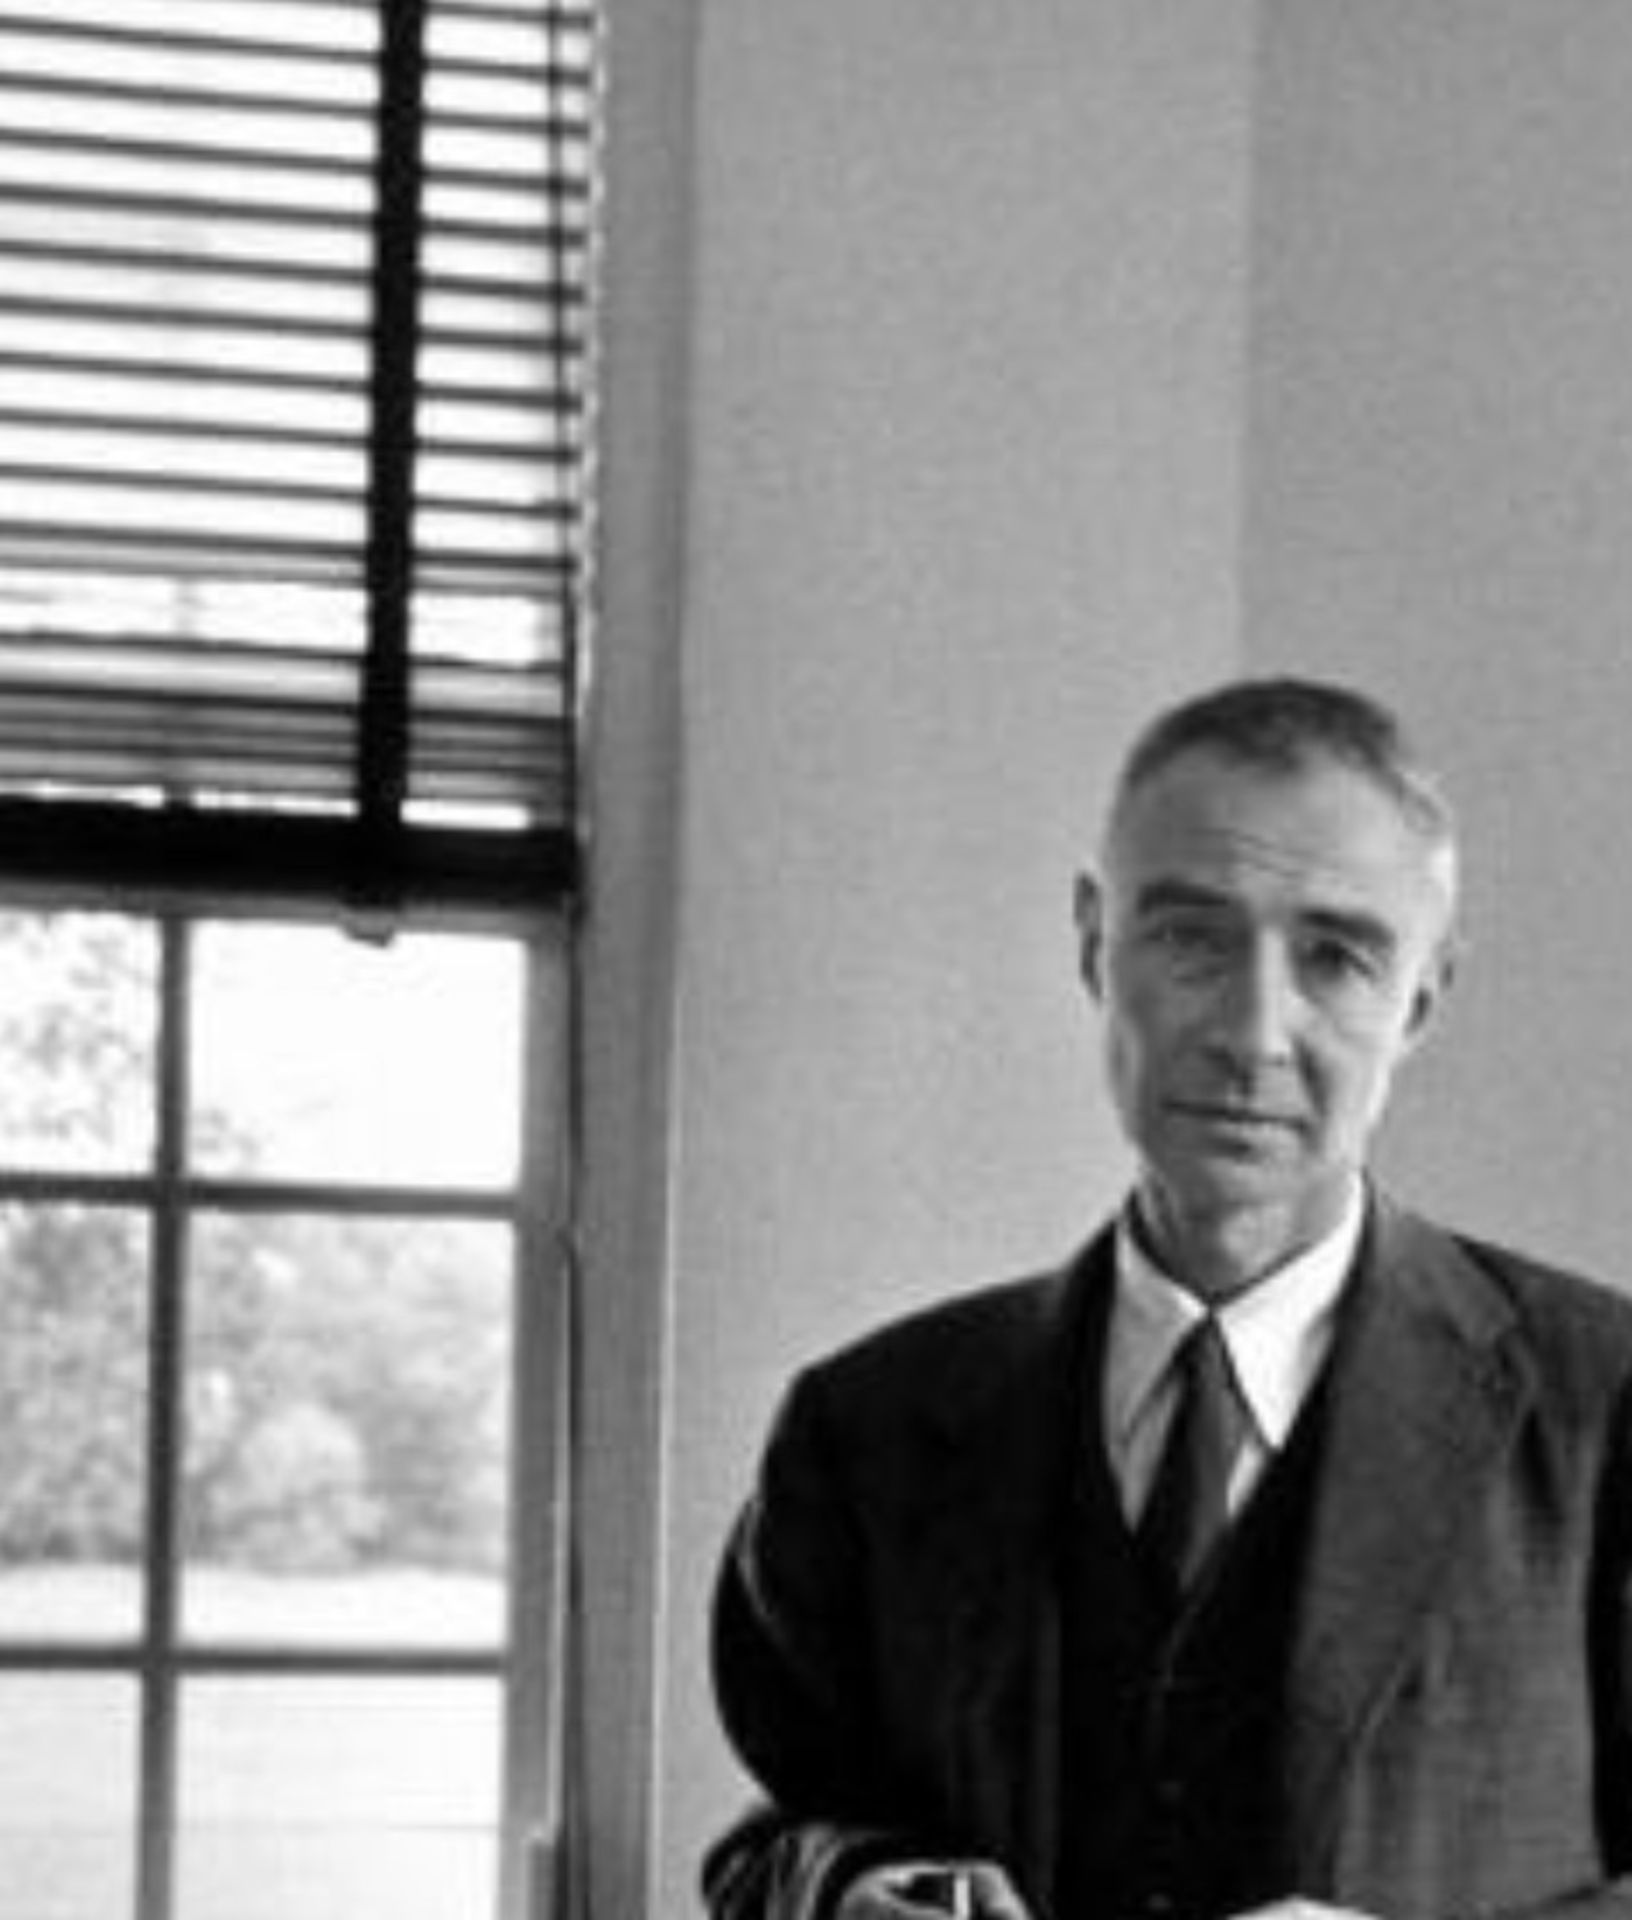 Robert Oppenheimer "Untitled" Photo Print - Image 3 of 5